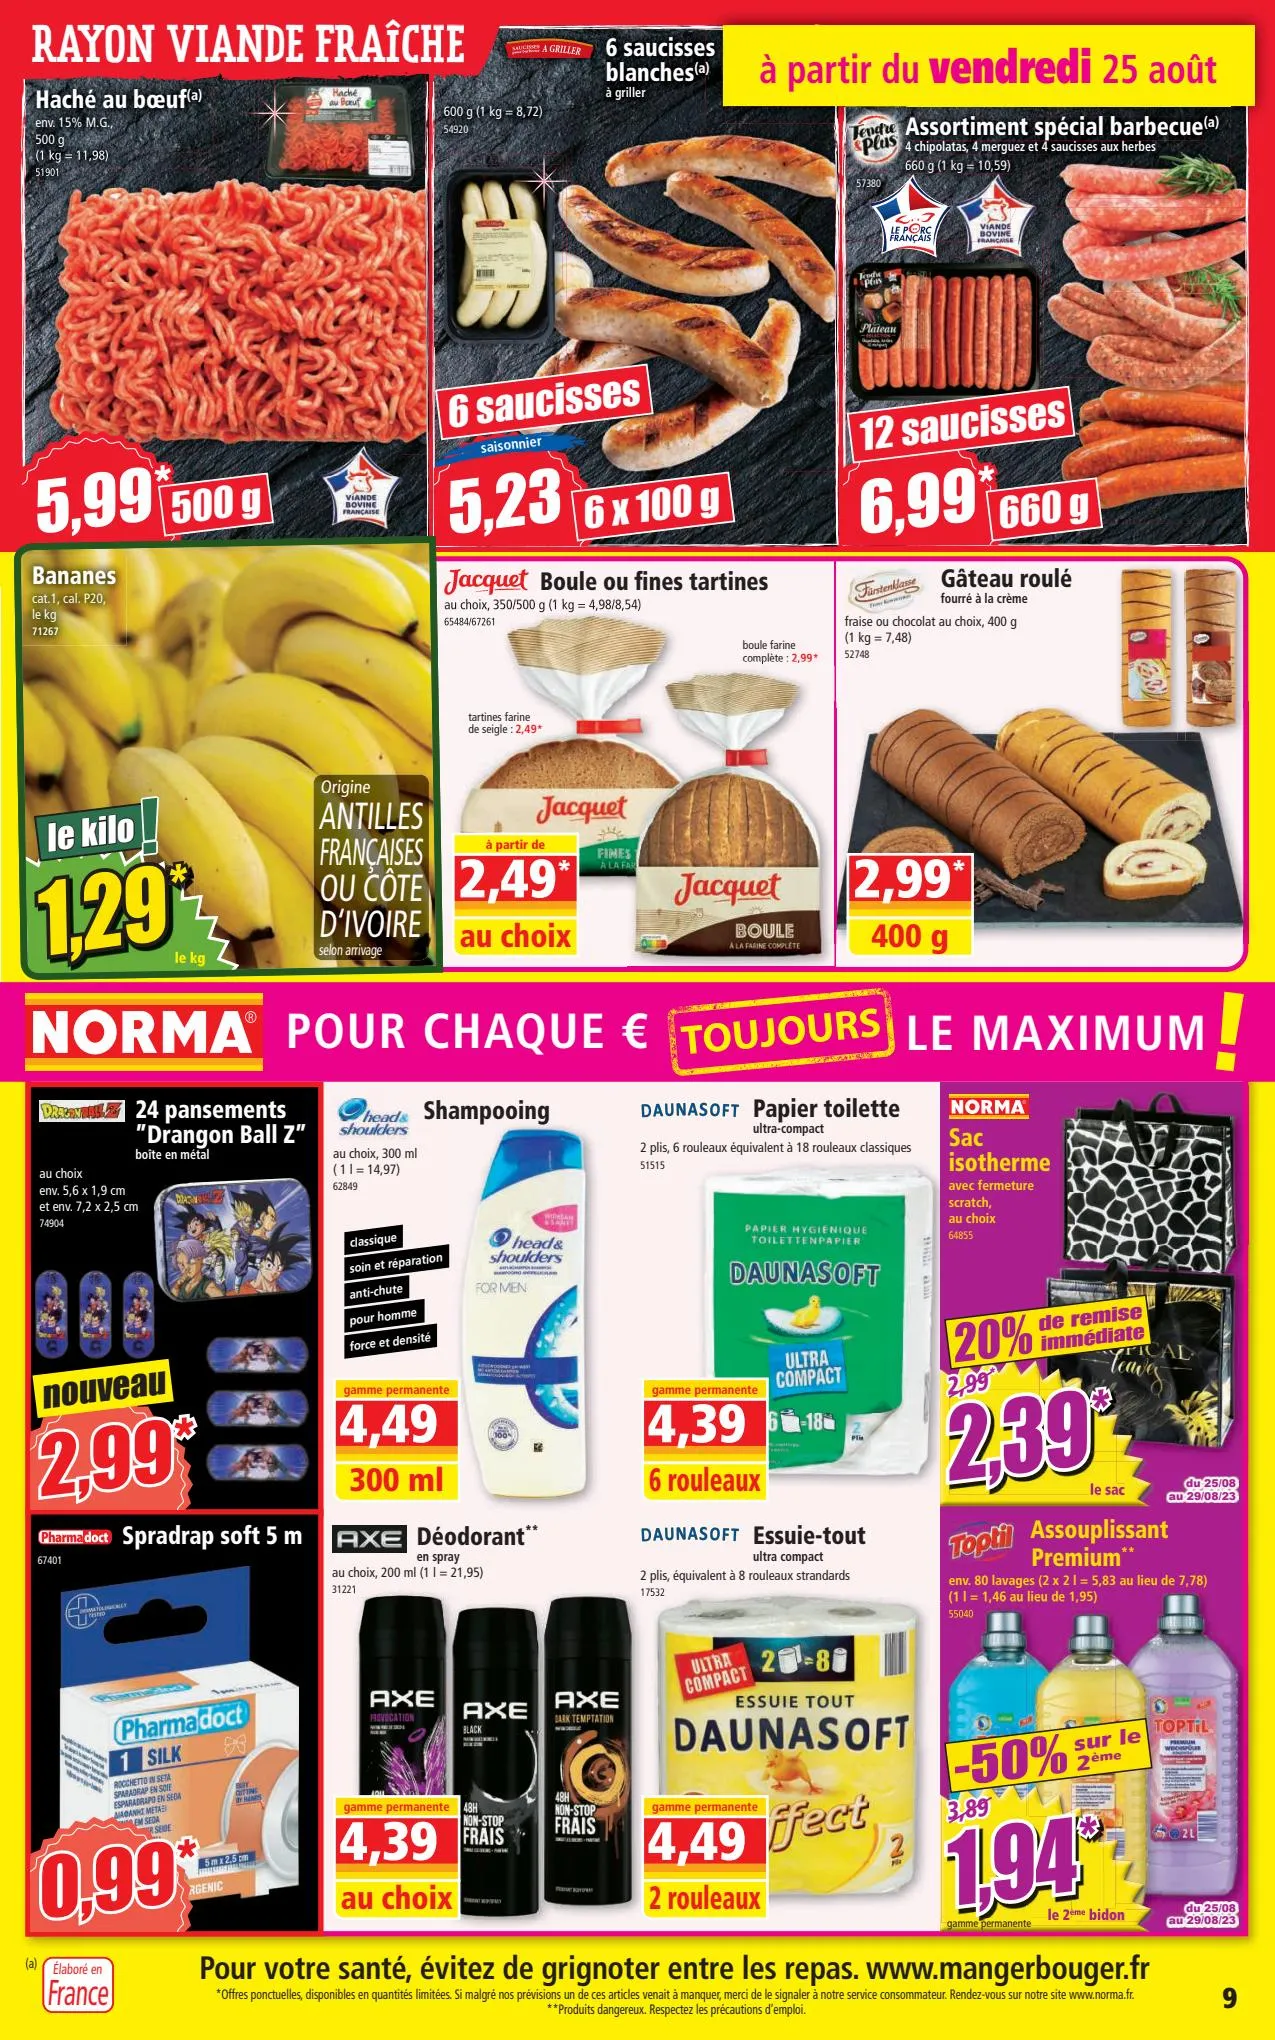 Catalogue Catalogue Norma, page 00009